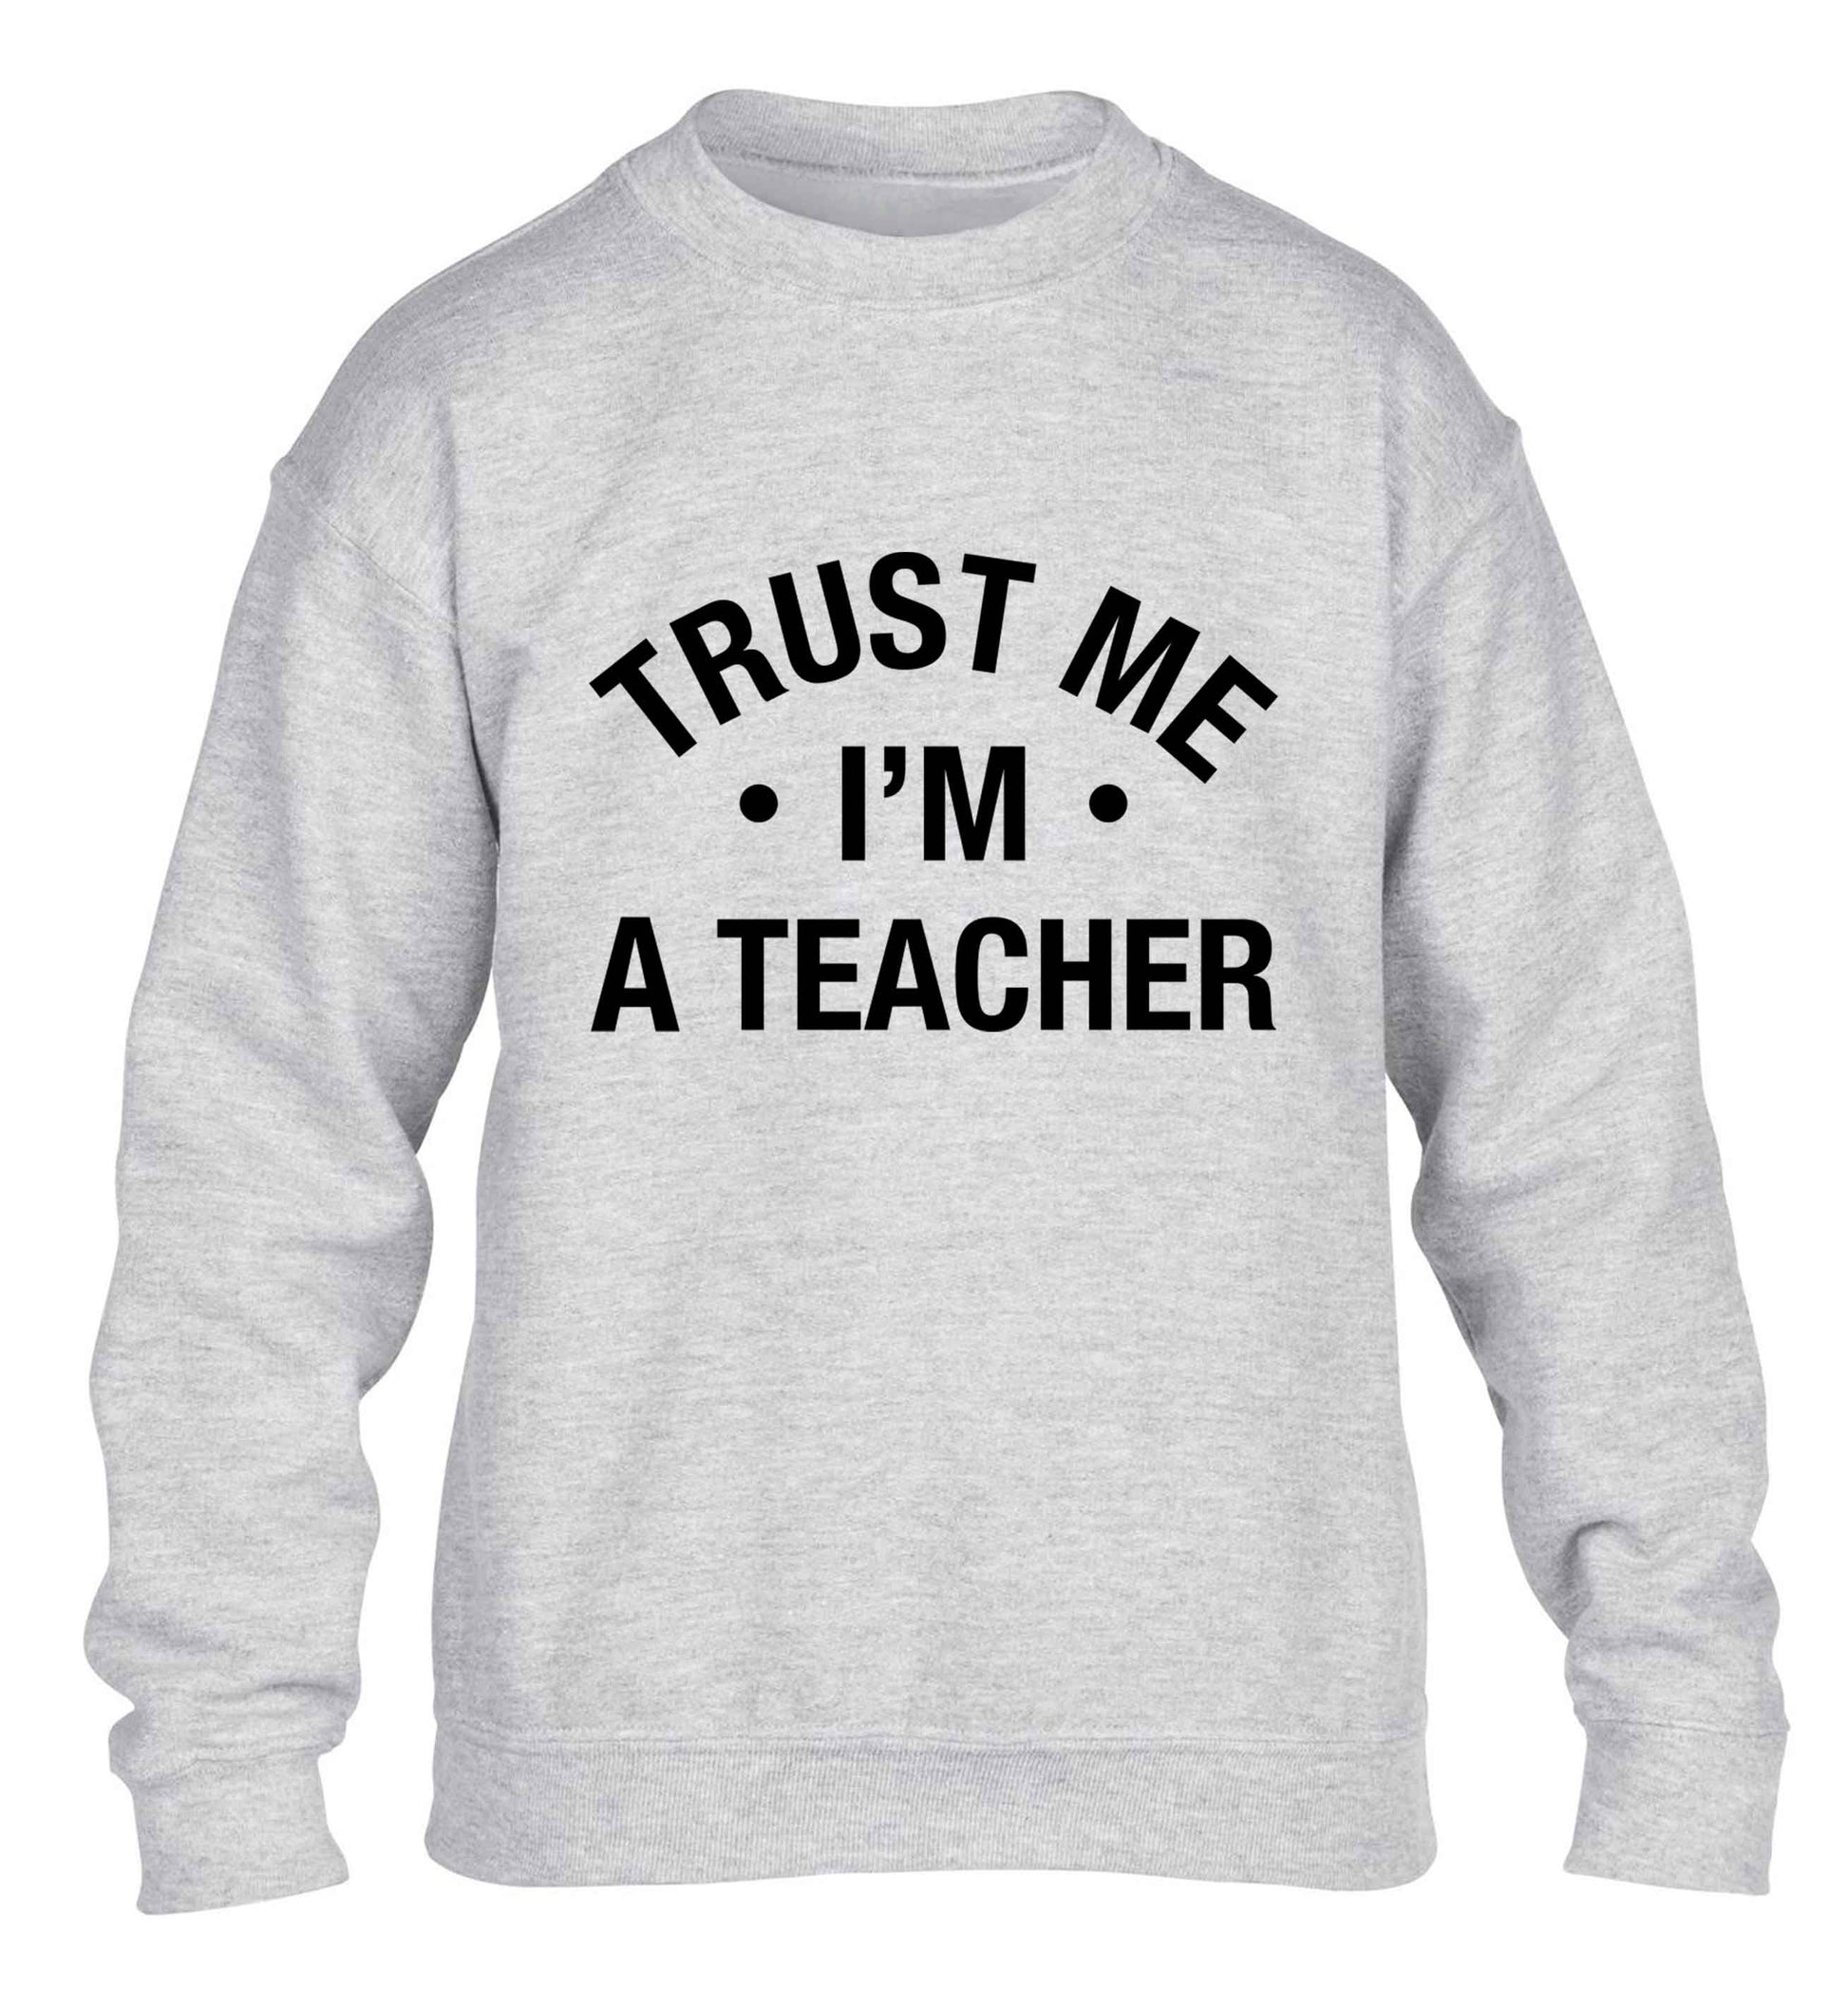 Trust me I'm a teacher children's grey sweater 12-13 Years